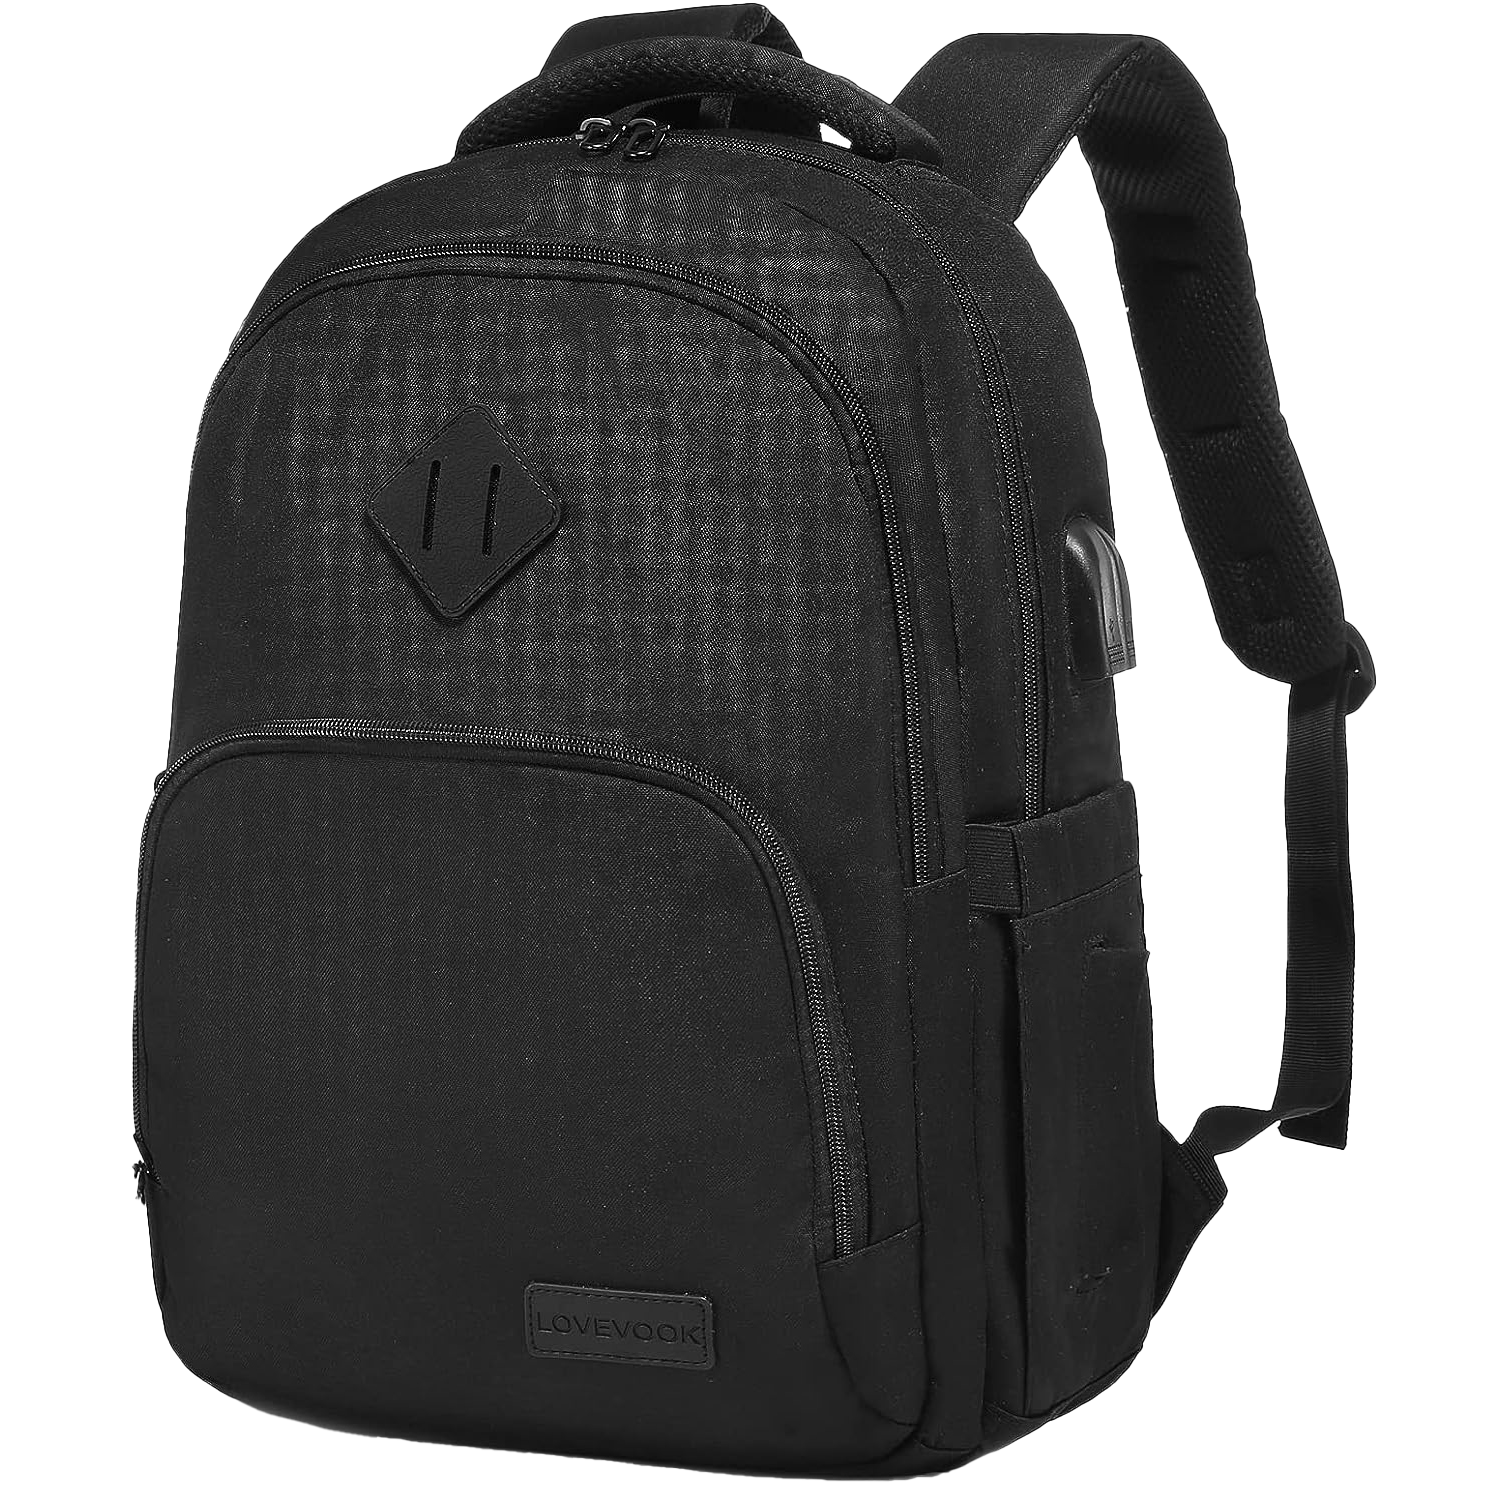 Lovevook Laptop Backpack in black